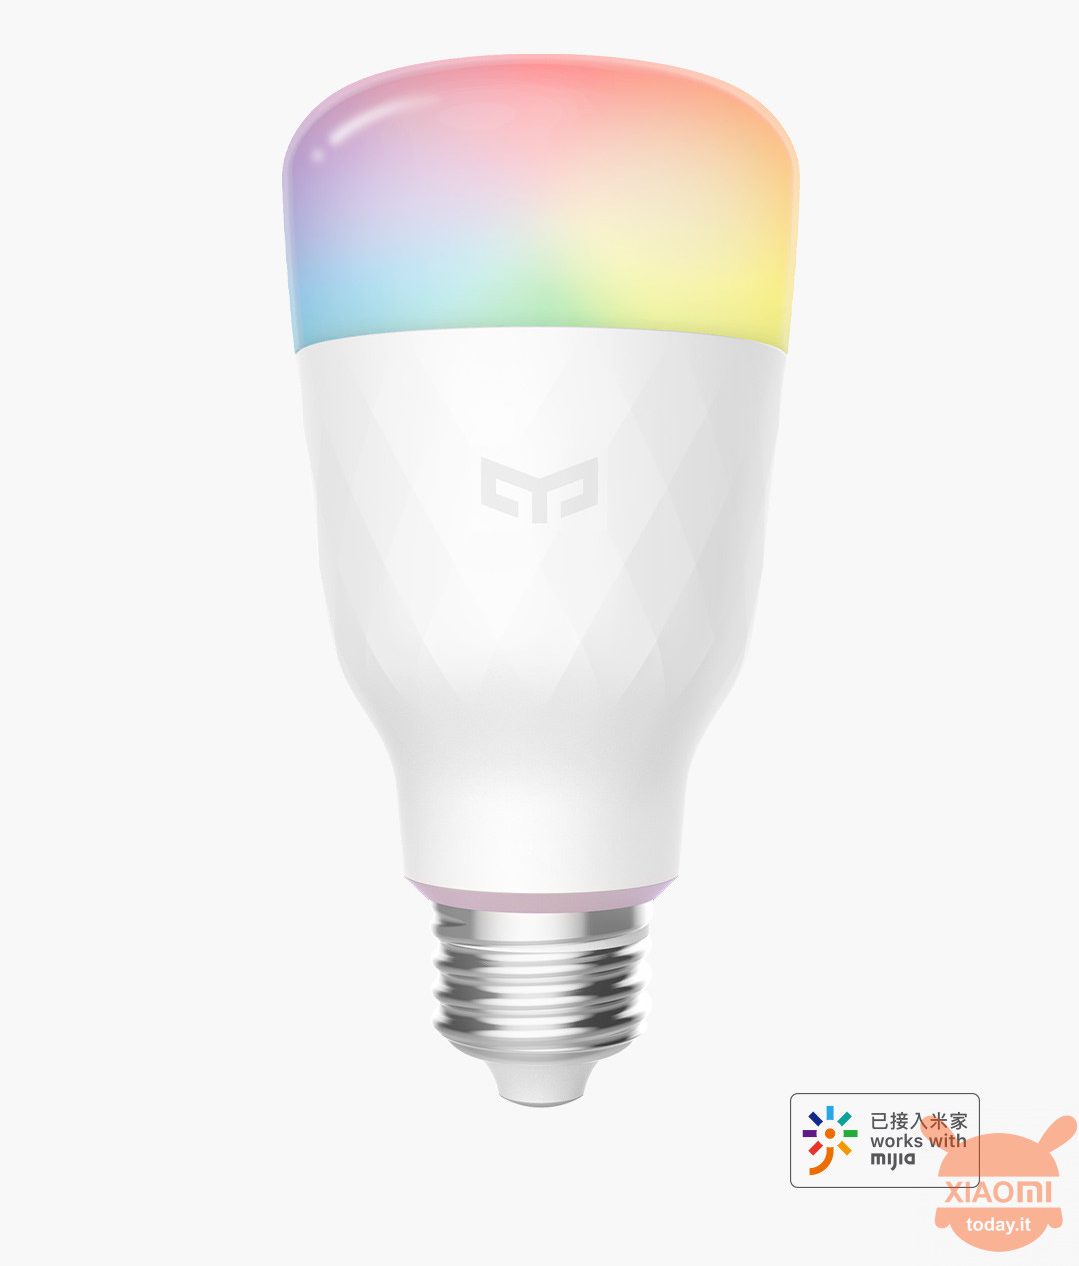 Xiaomi MINI Head Massager Yeelight LED Bulb 1S YLDP13YL